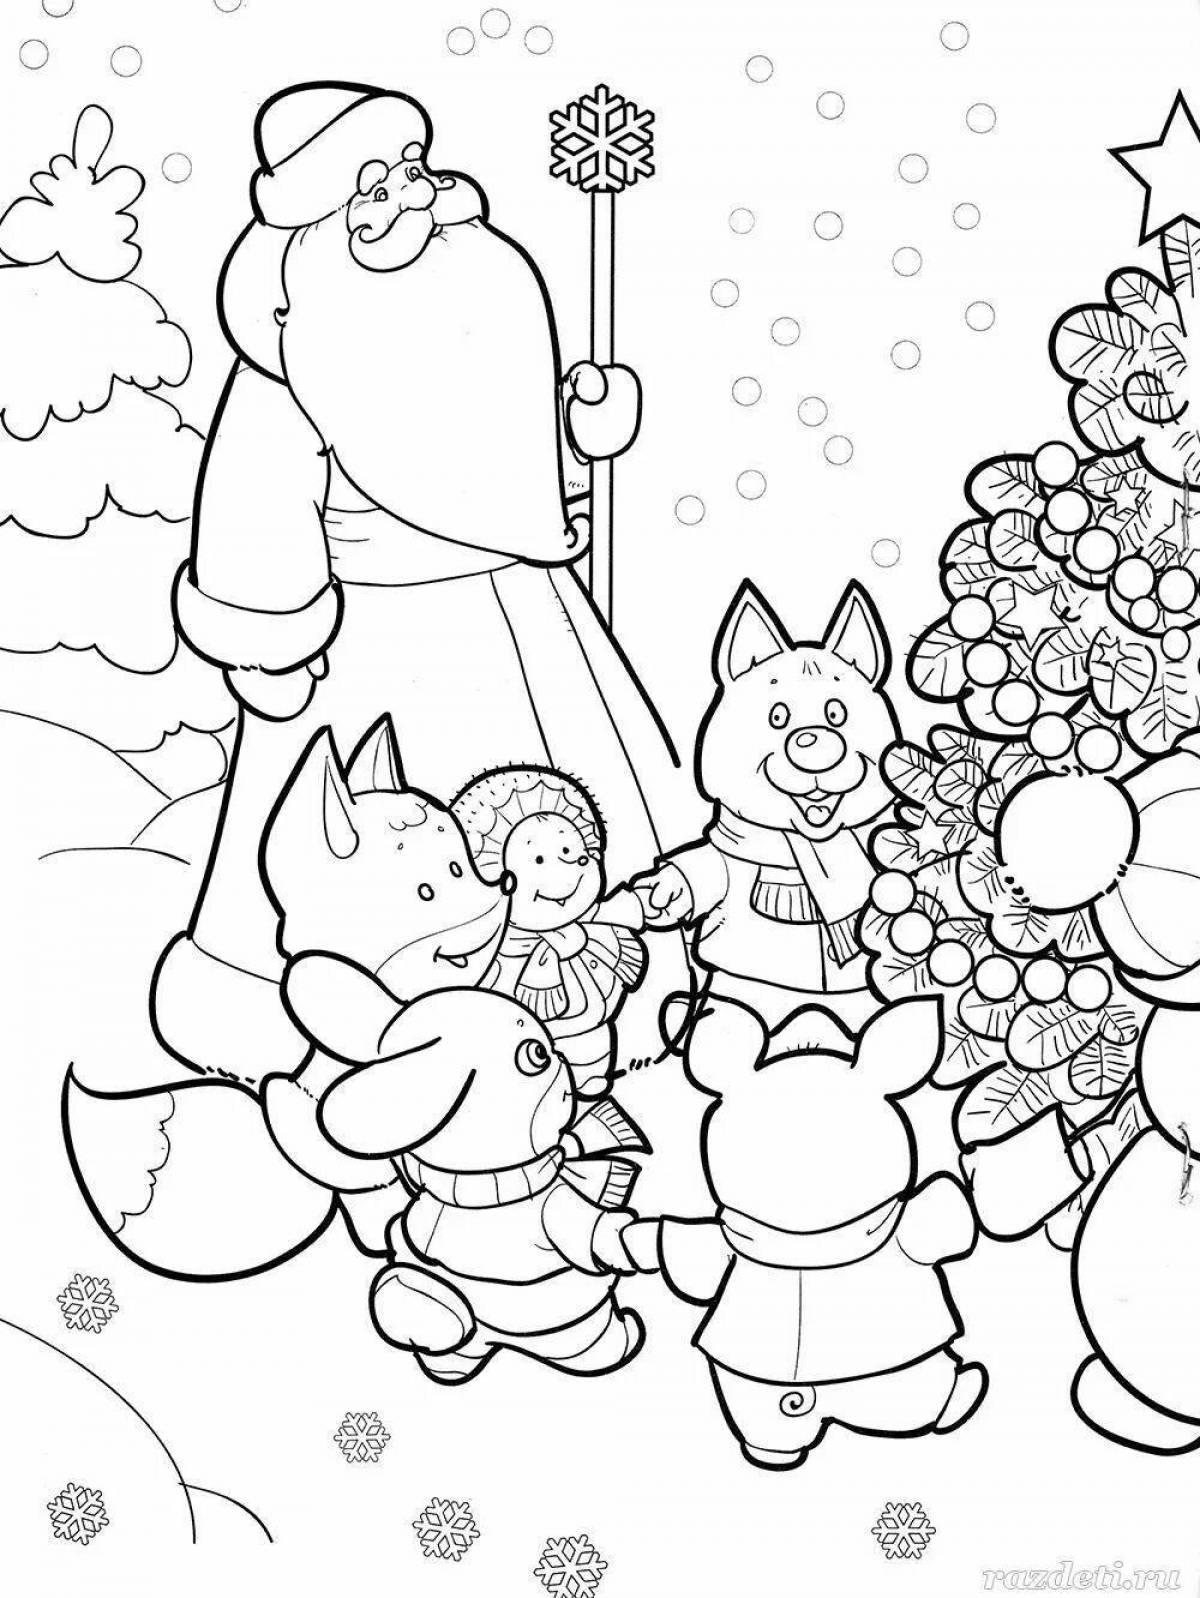 Coloring book festive Santa Claus and animals